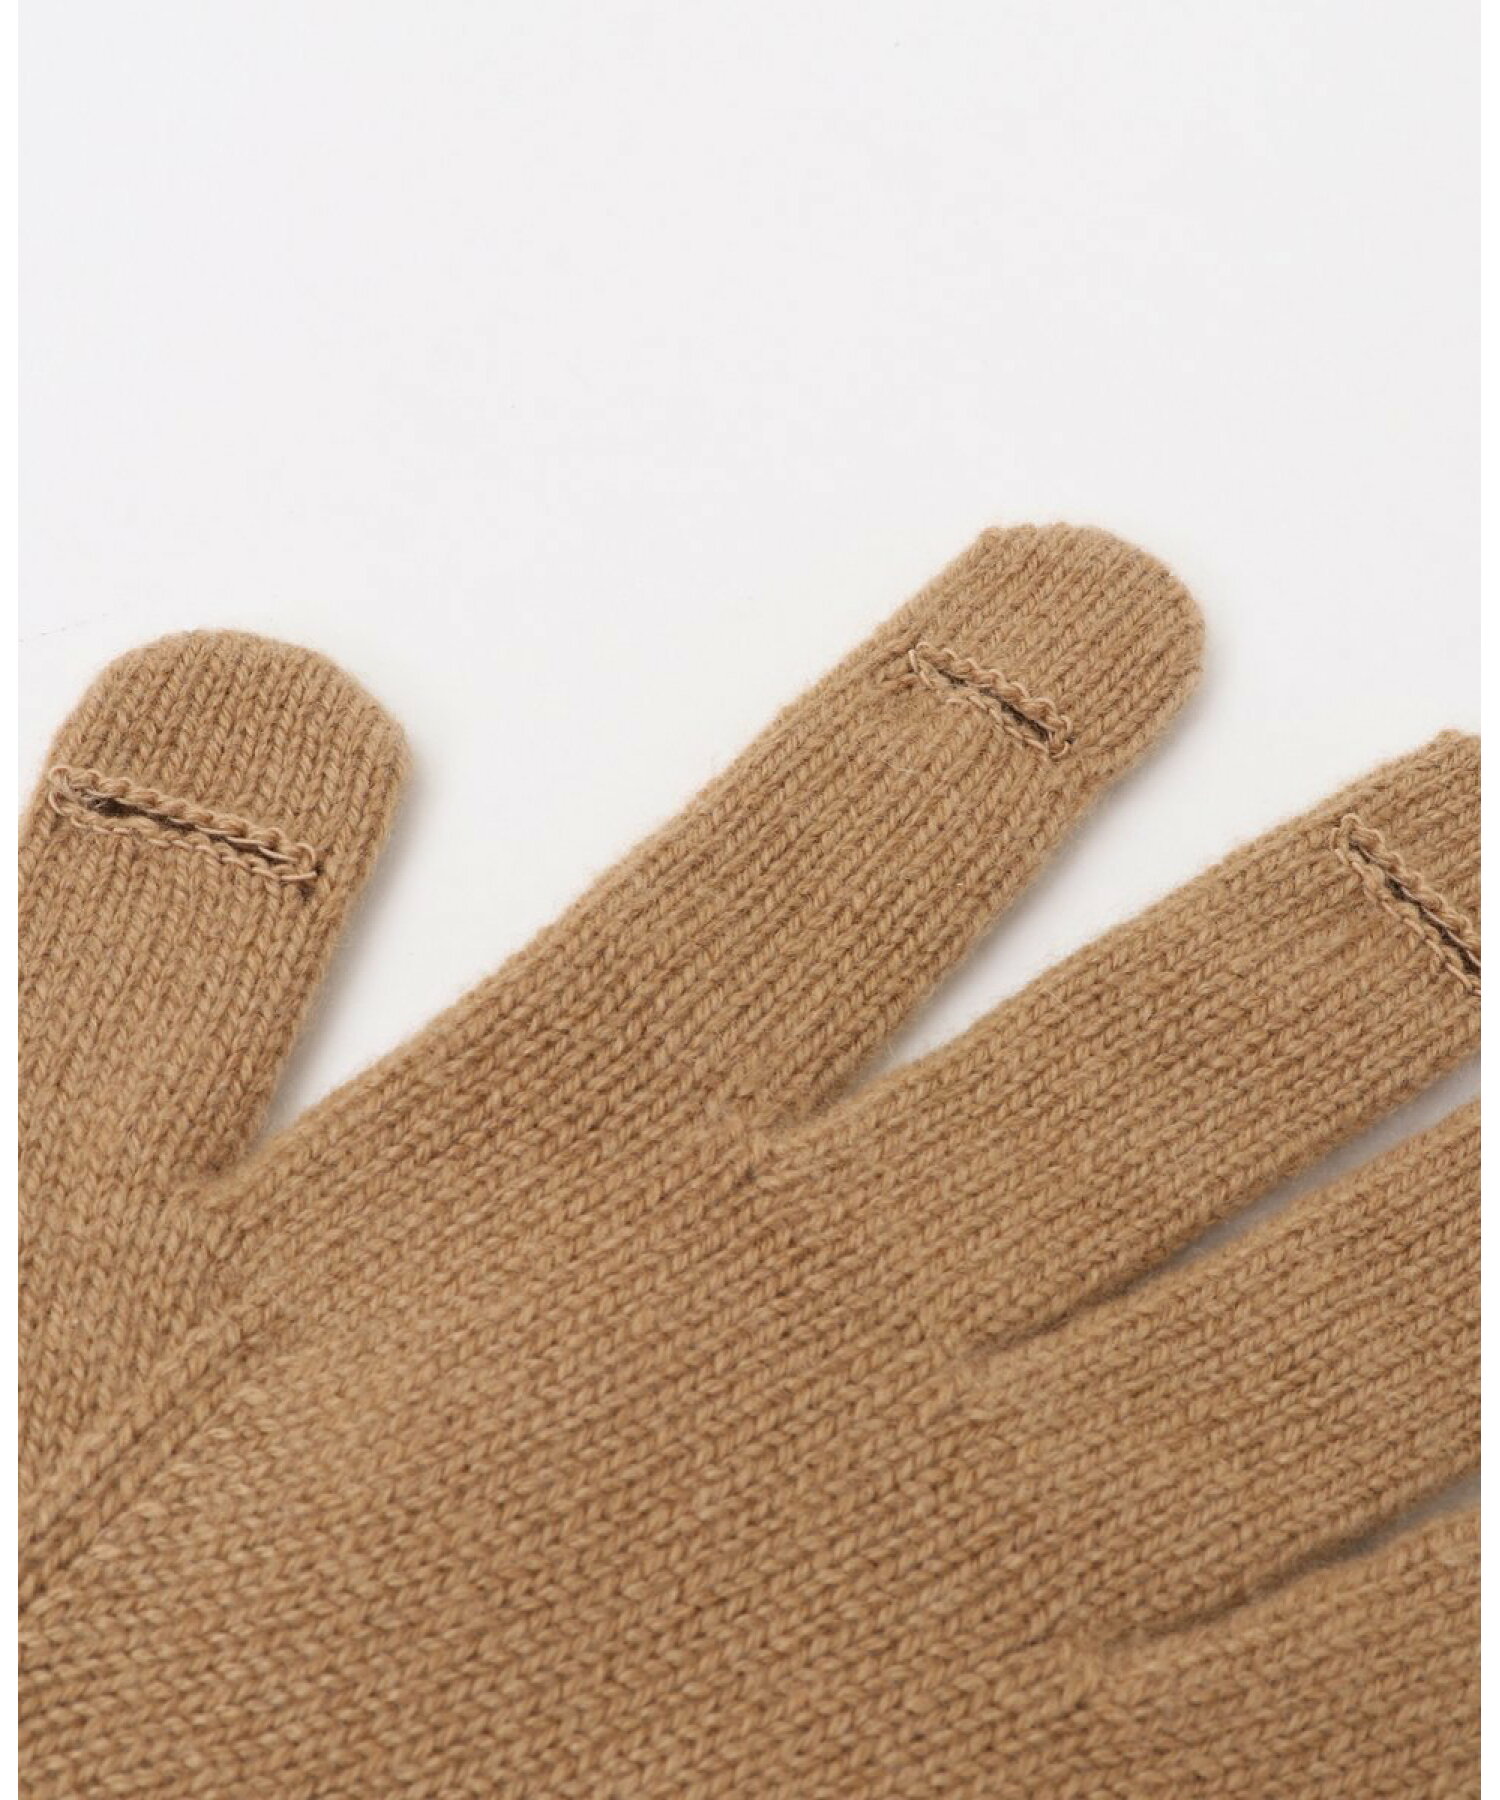 MARCOMOND/WRKNI-010 PureCashmere100% 5finger gloves